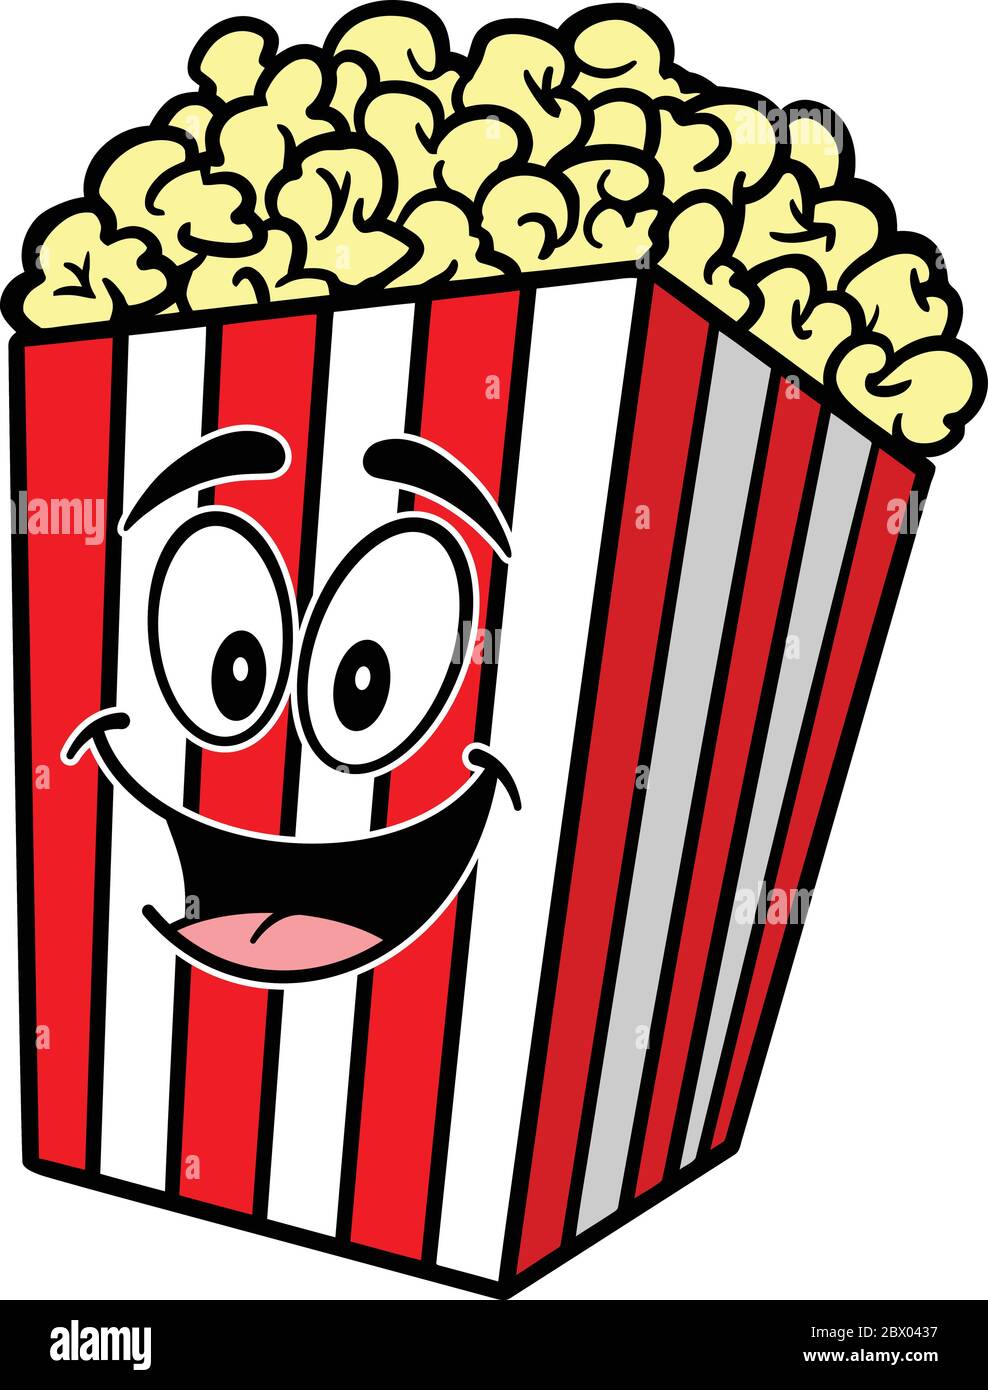 Popcorn Mascot- A Cartoon Illustration of a Popcorn Mascot. Stock Vector